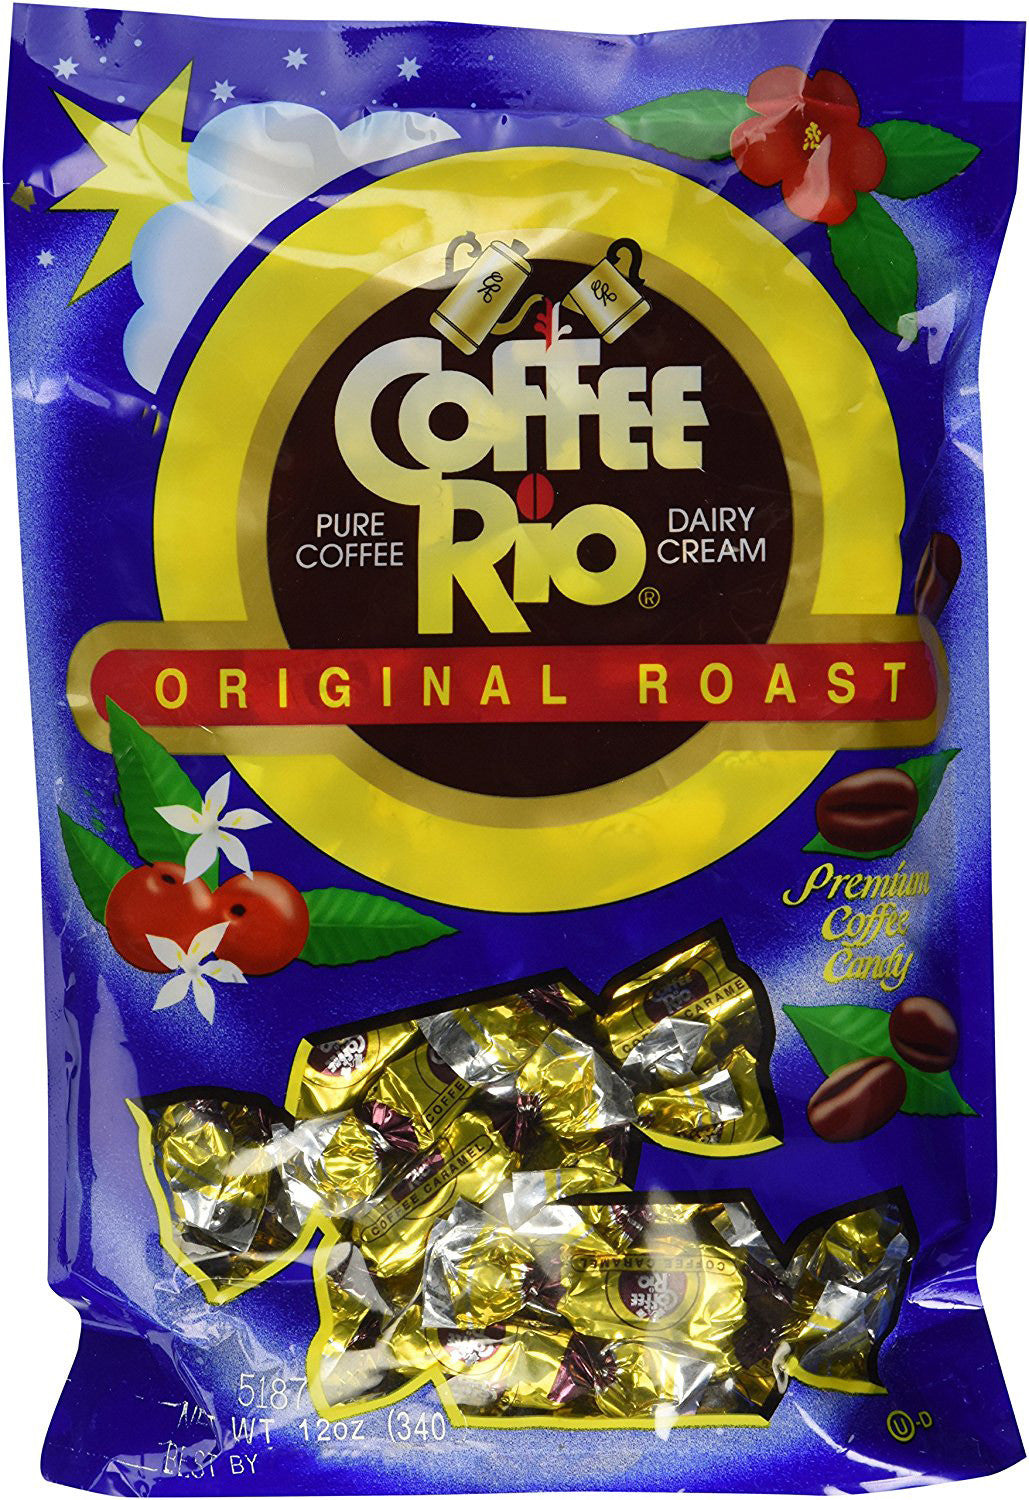 Coffee Rio Pure Coffee & Dairy Cream Oiginal Roast Premium Coffee Candy 12 OZ